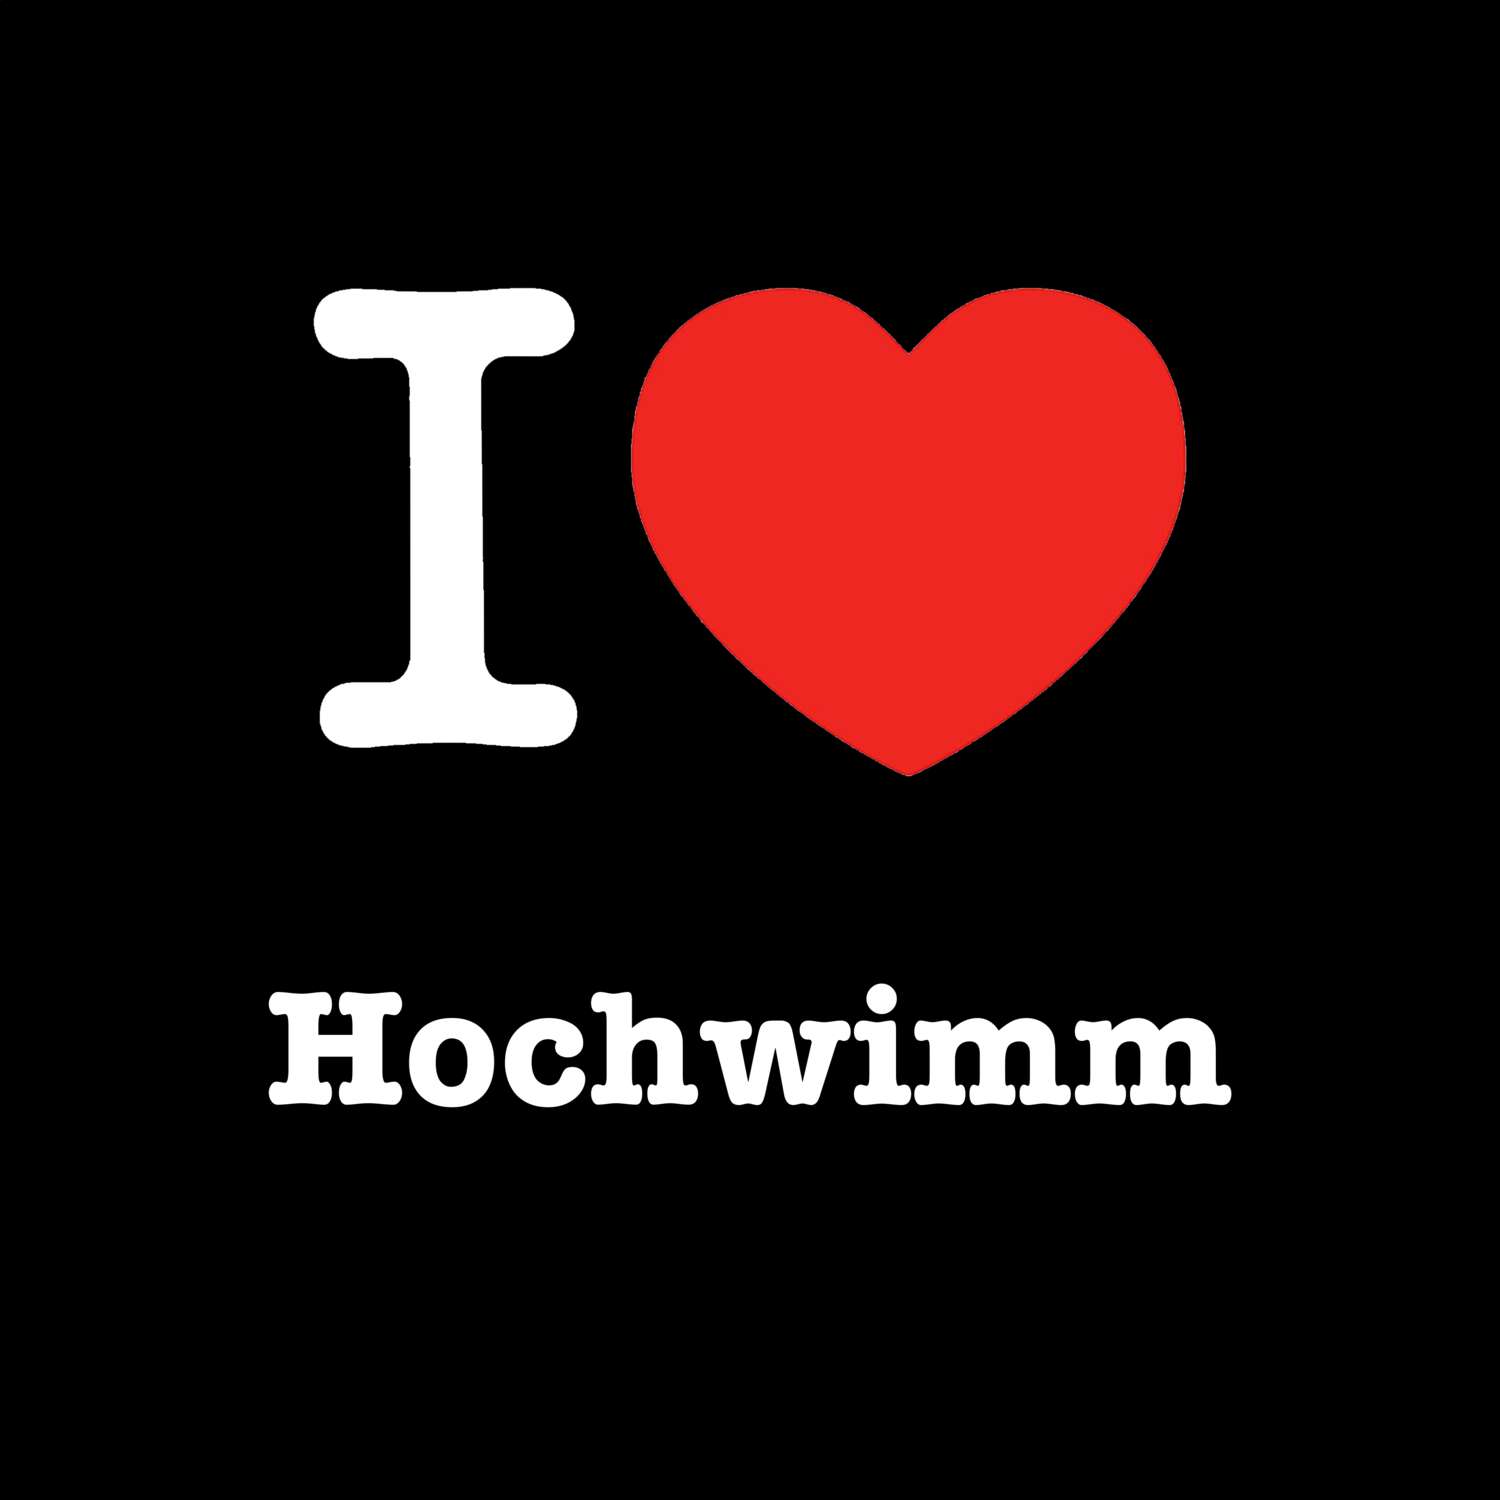 Hochwimm T-Shirt »I love«